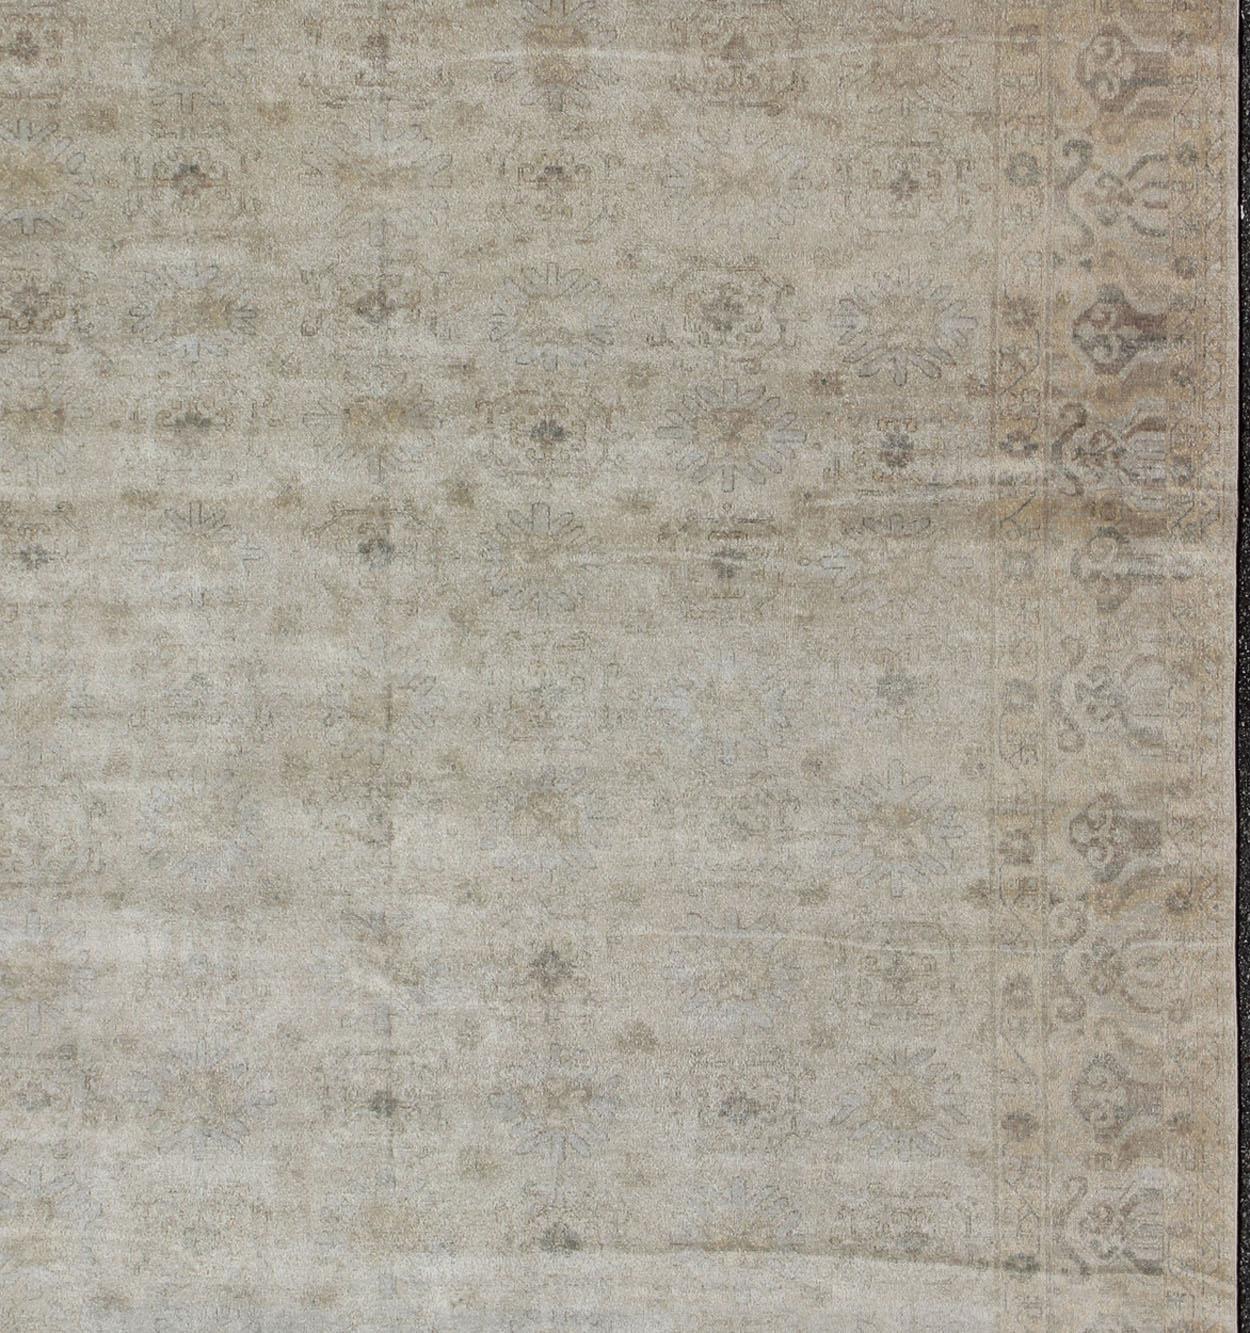 Modern Khotan rug, rug OB-9413619-592009, country of origin / type: India / Khotan, circa Early-21st Century.

Measures: 12'0 x 15'0.